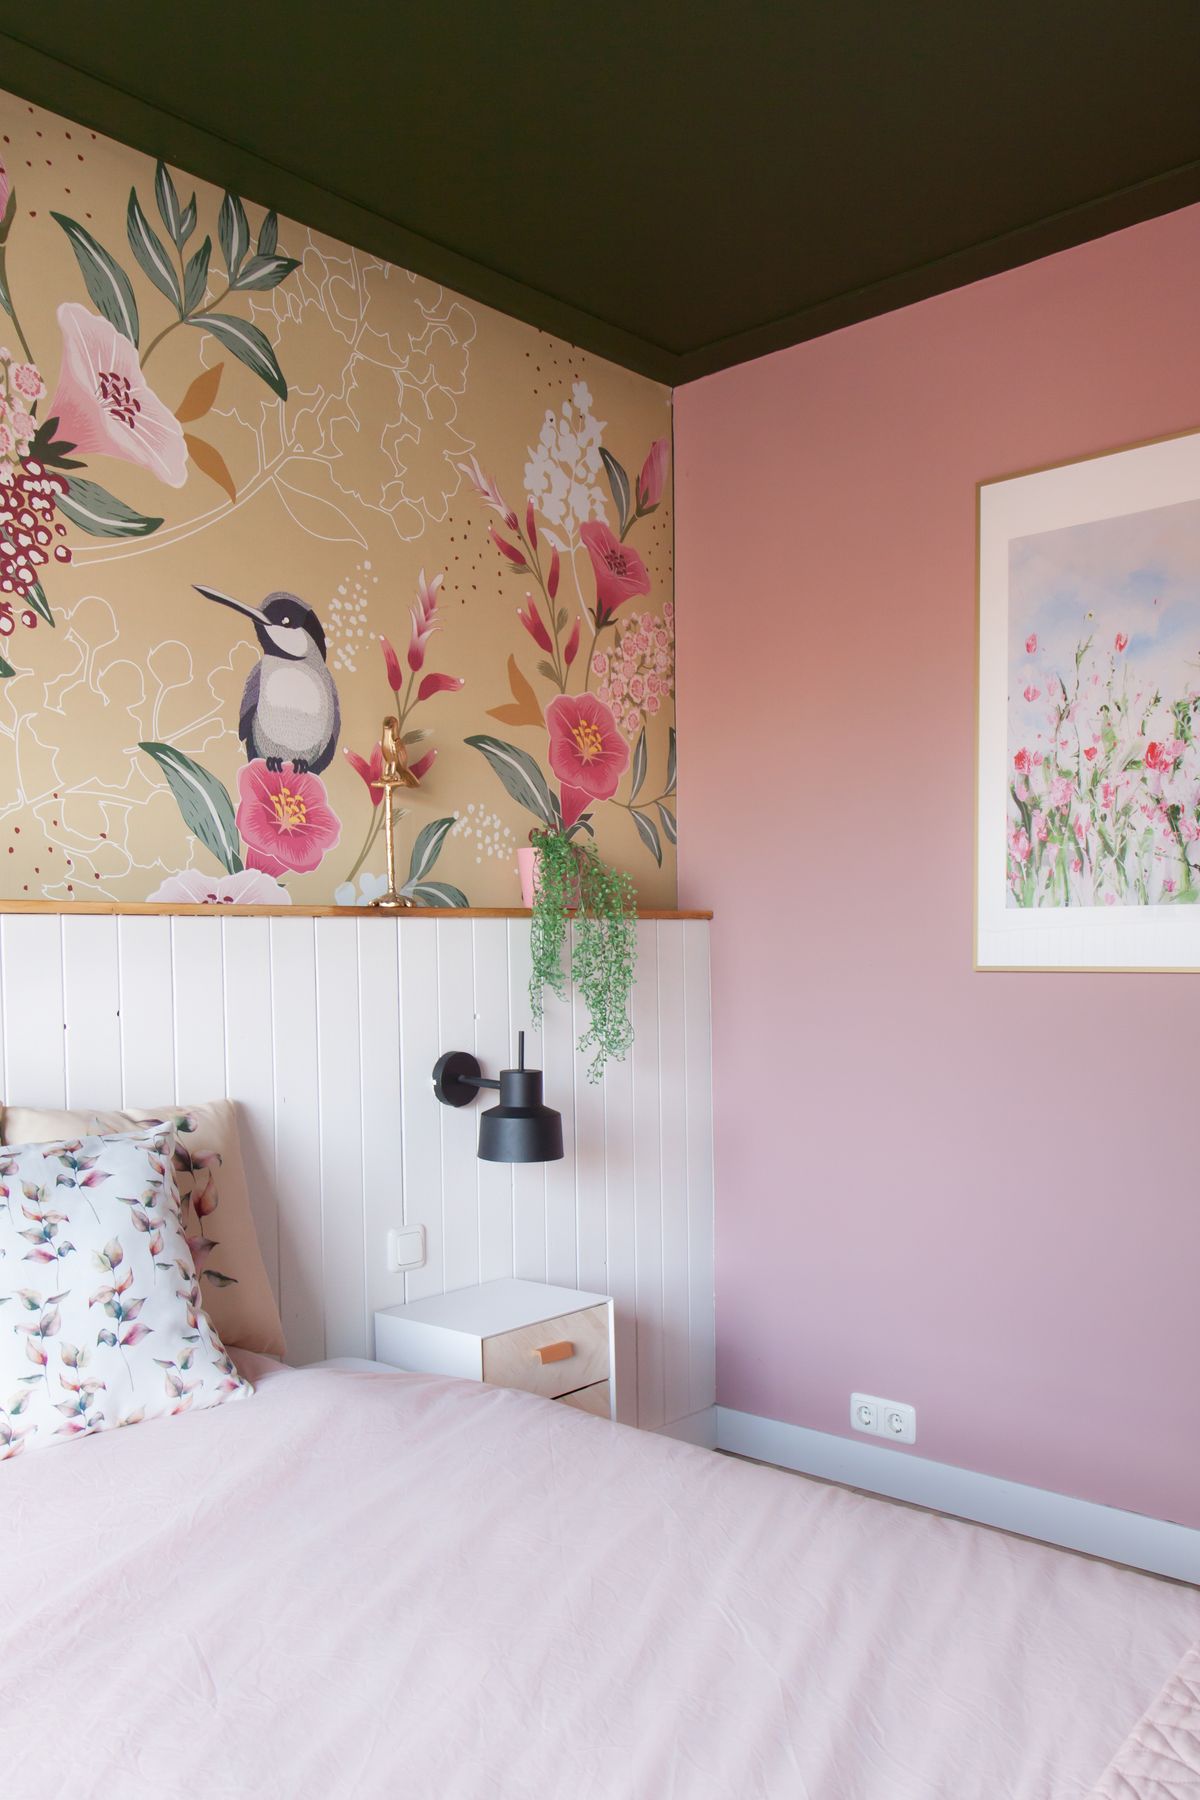 Slaapkamer met fotobehang, roze muur en groen plafond en lambrisering